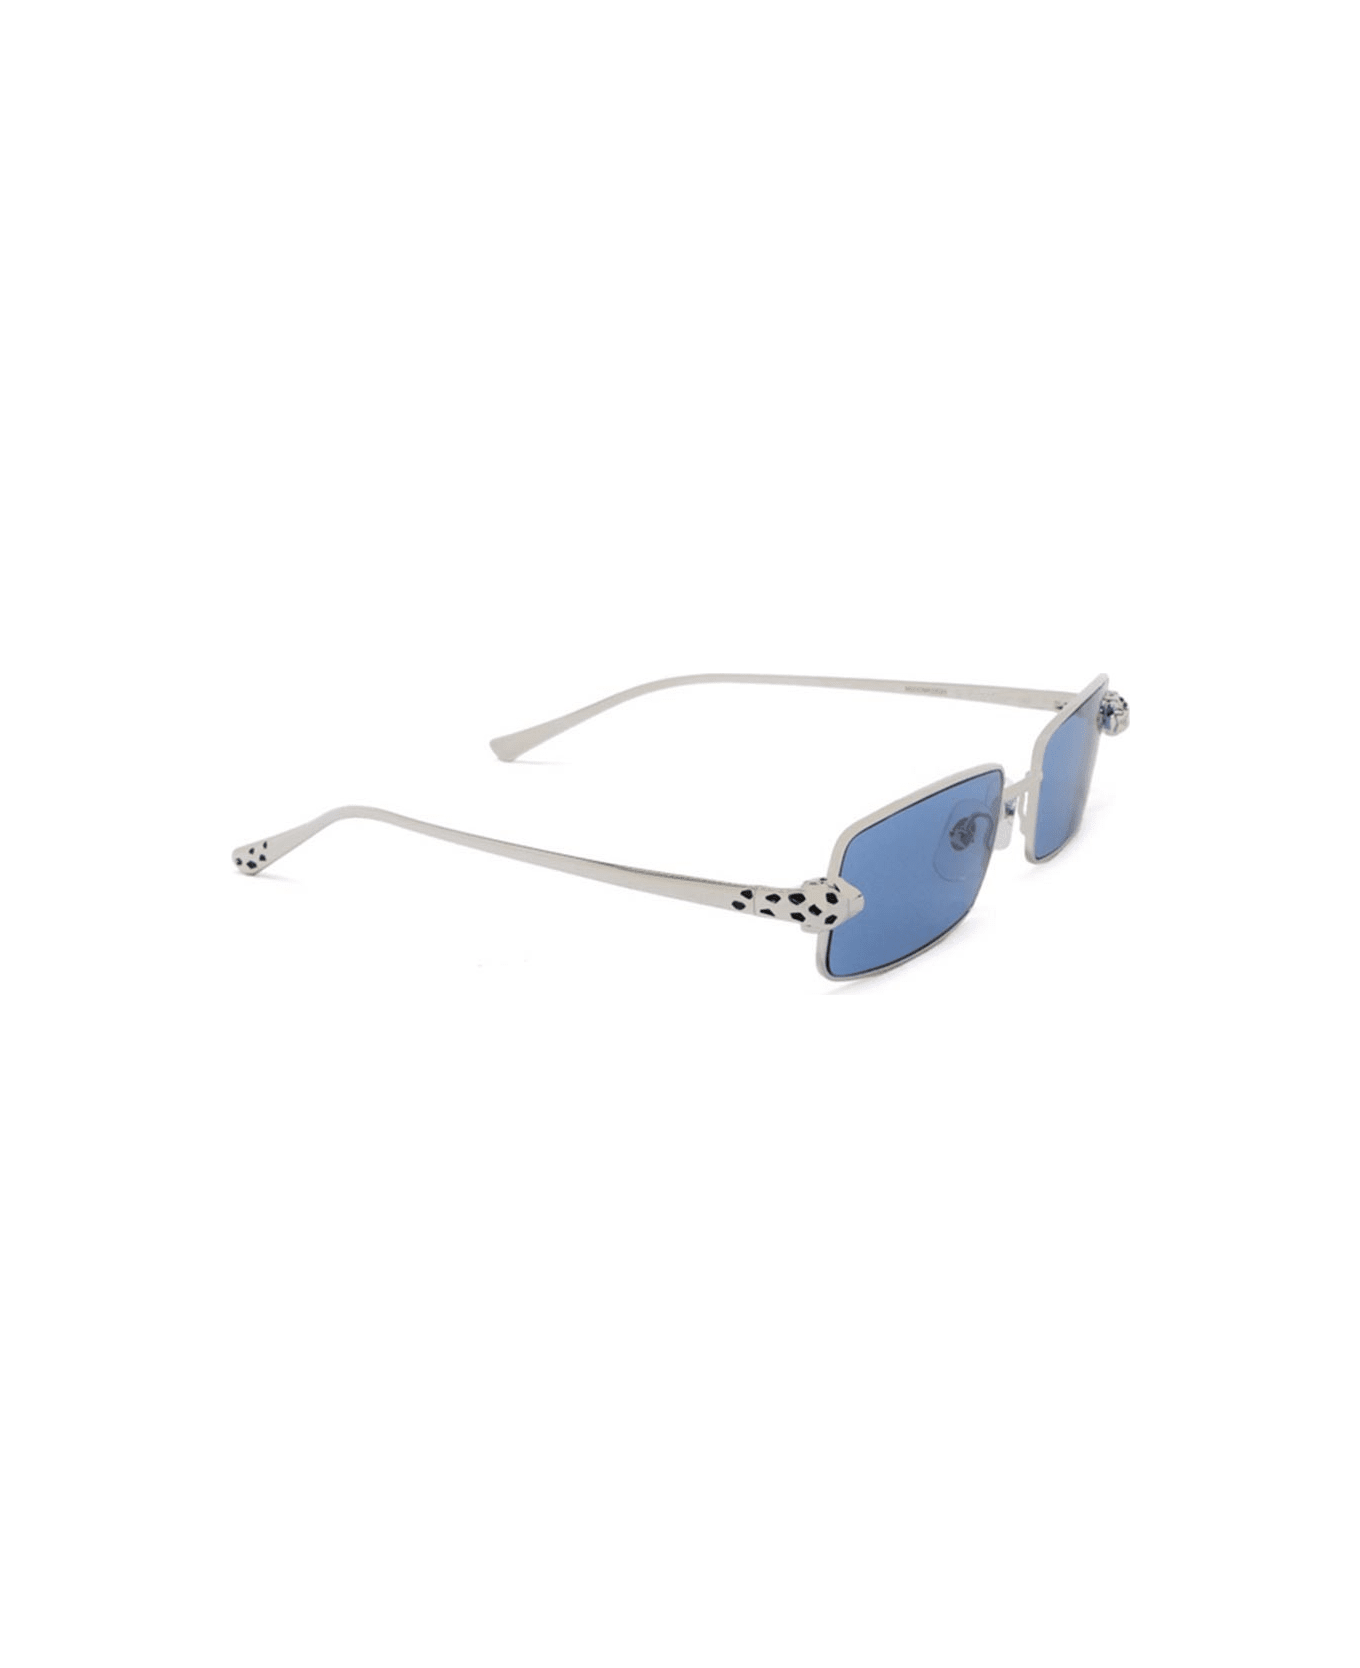 Cartier Eyewear Sunglasses - Silver/Blu サングラス